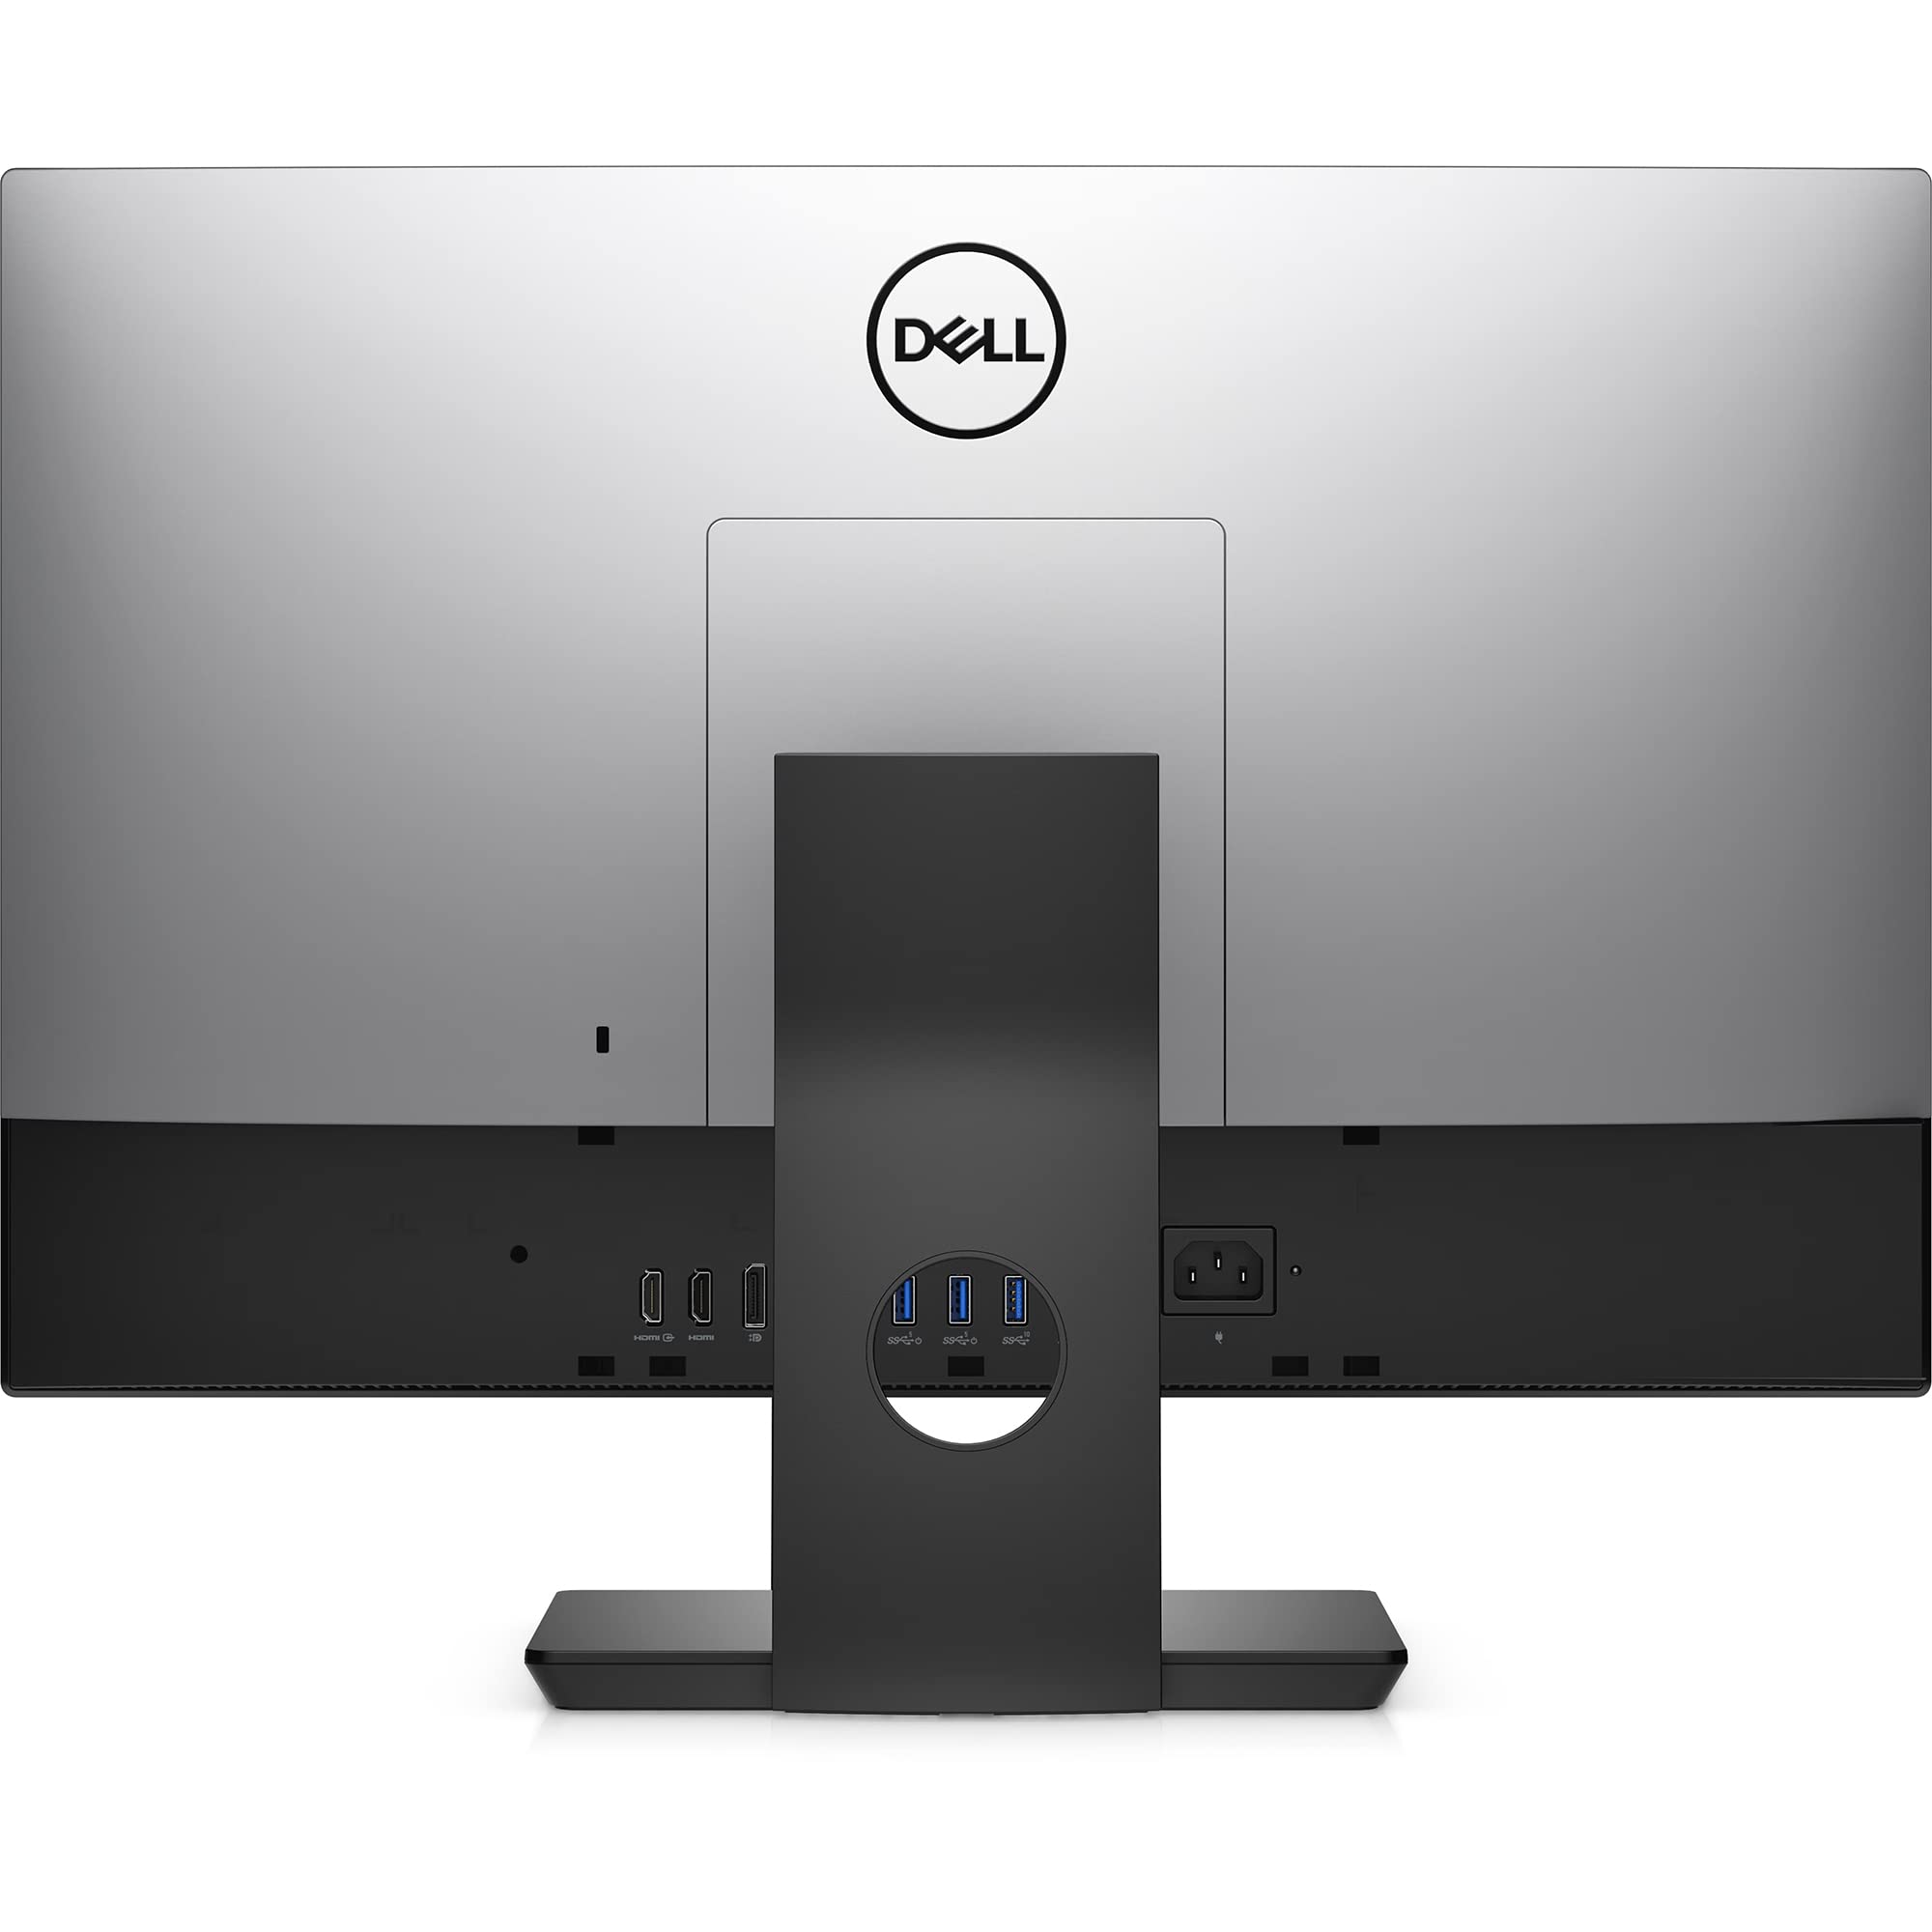 Dell OptiPlex 7400 23.8" Full HD All-in-One Desktop Computer - 12th Gen Intel Core i5-12500 6-Core up to 4.60 GHz Processor, 16GB RAM, 512GB NVMe SSD + 1TB HDD, Intel UHD Graphics 770, Windows 10 Pro